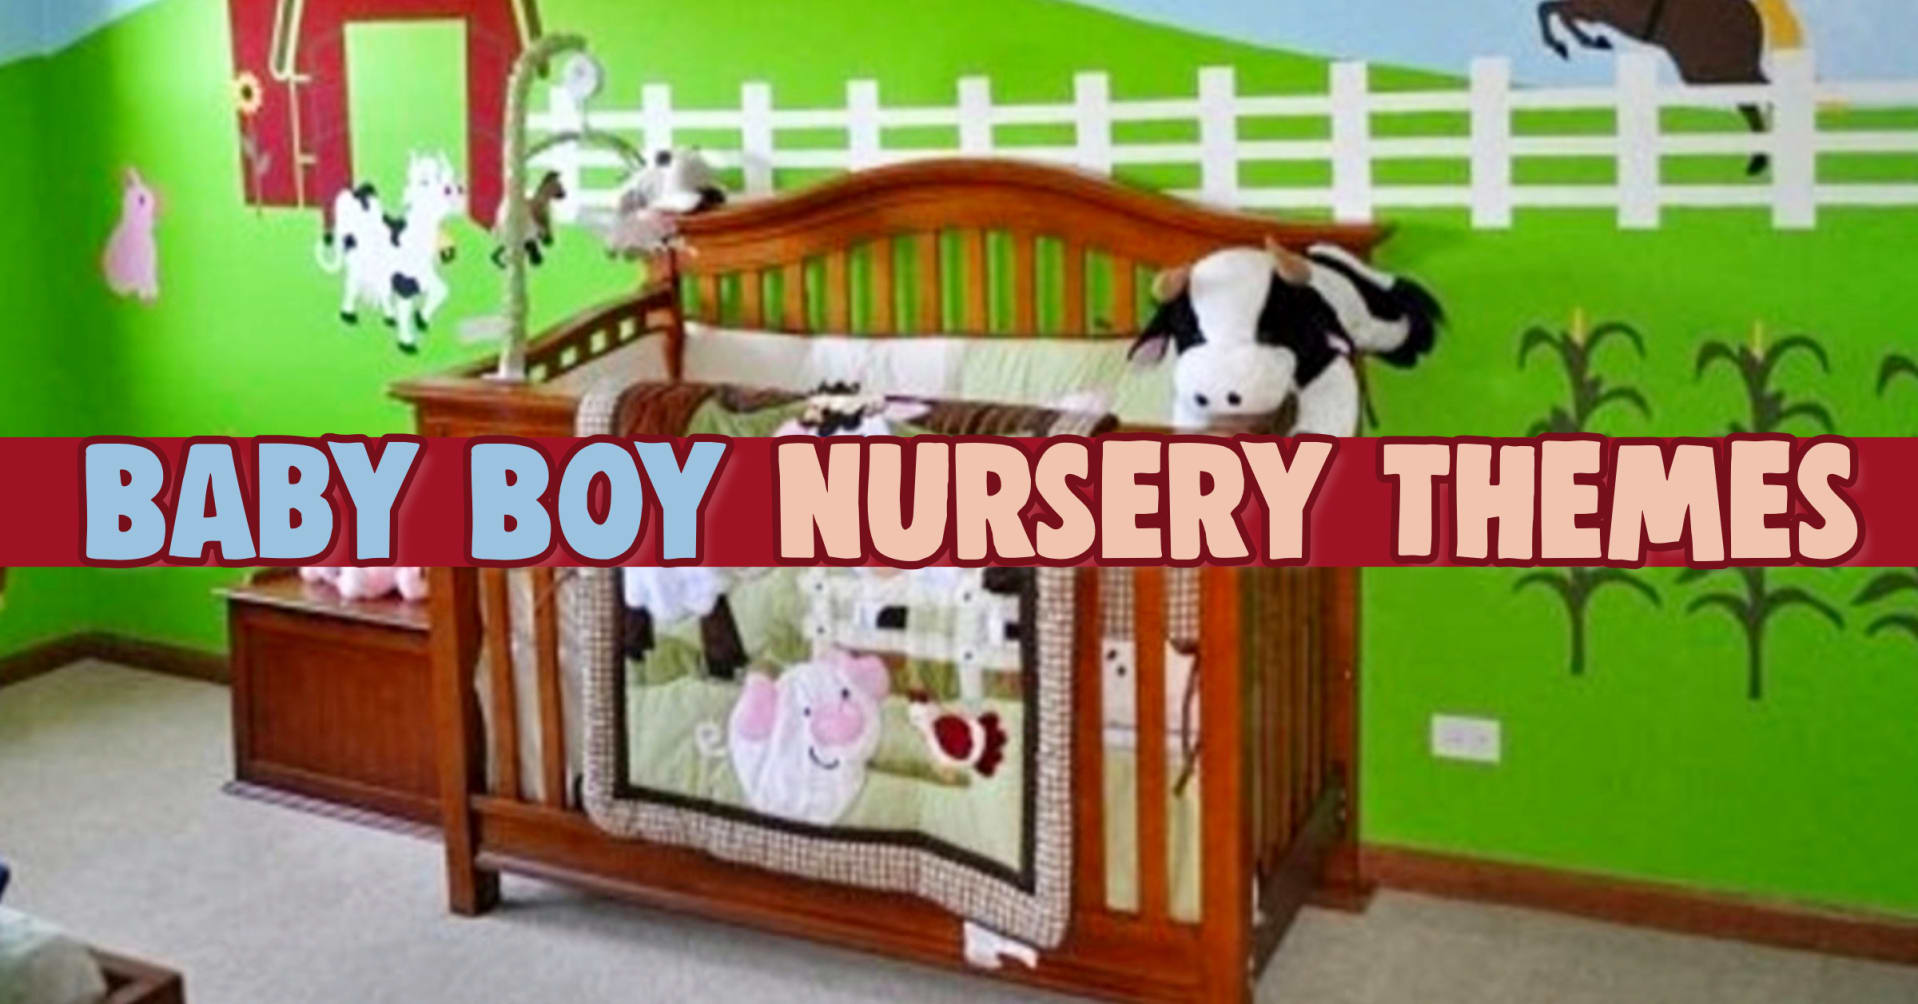 Baby boy nursery themes and decorating ideas for a baby boy nursery room - baby room decor on a budget